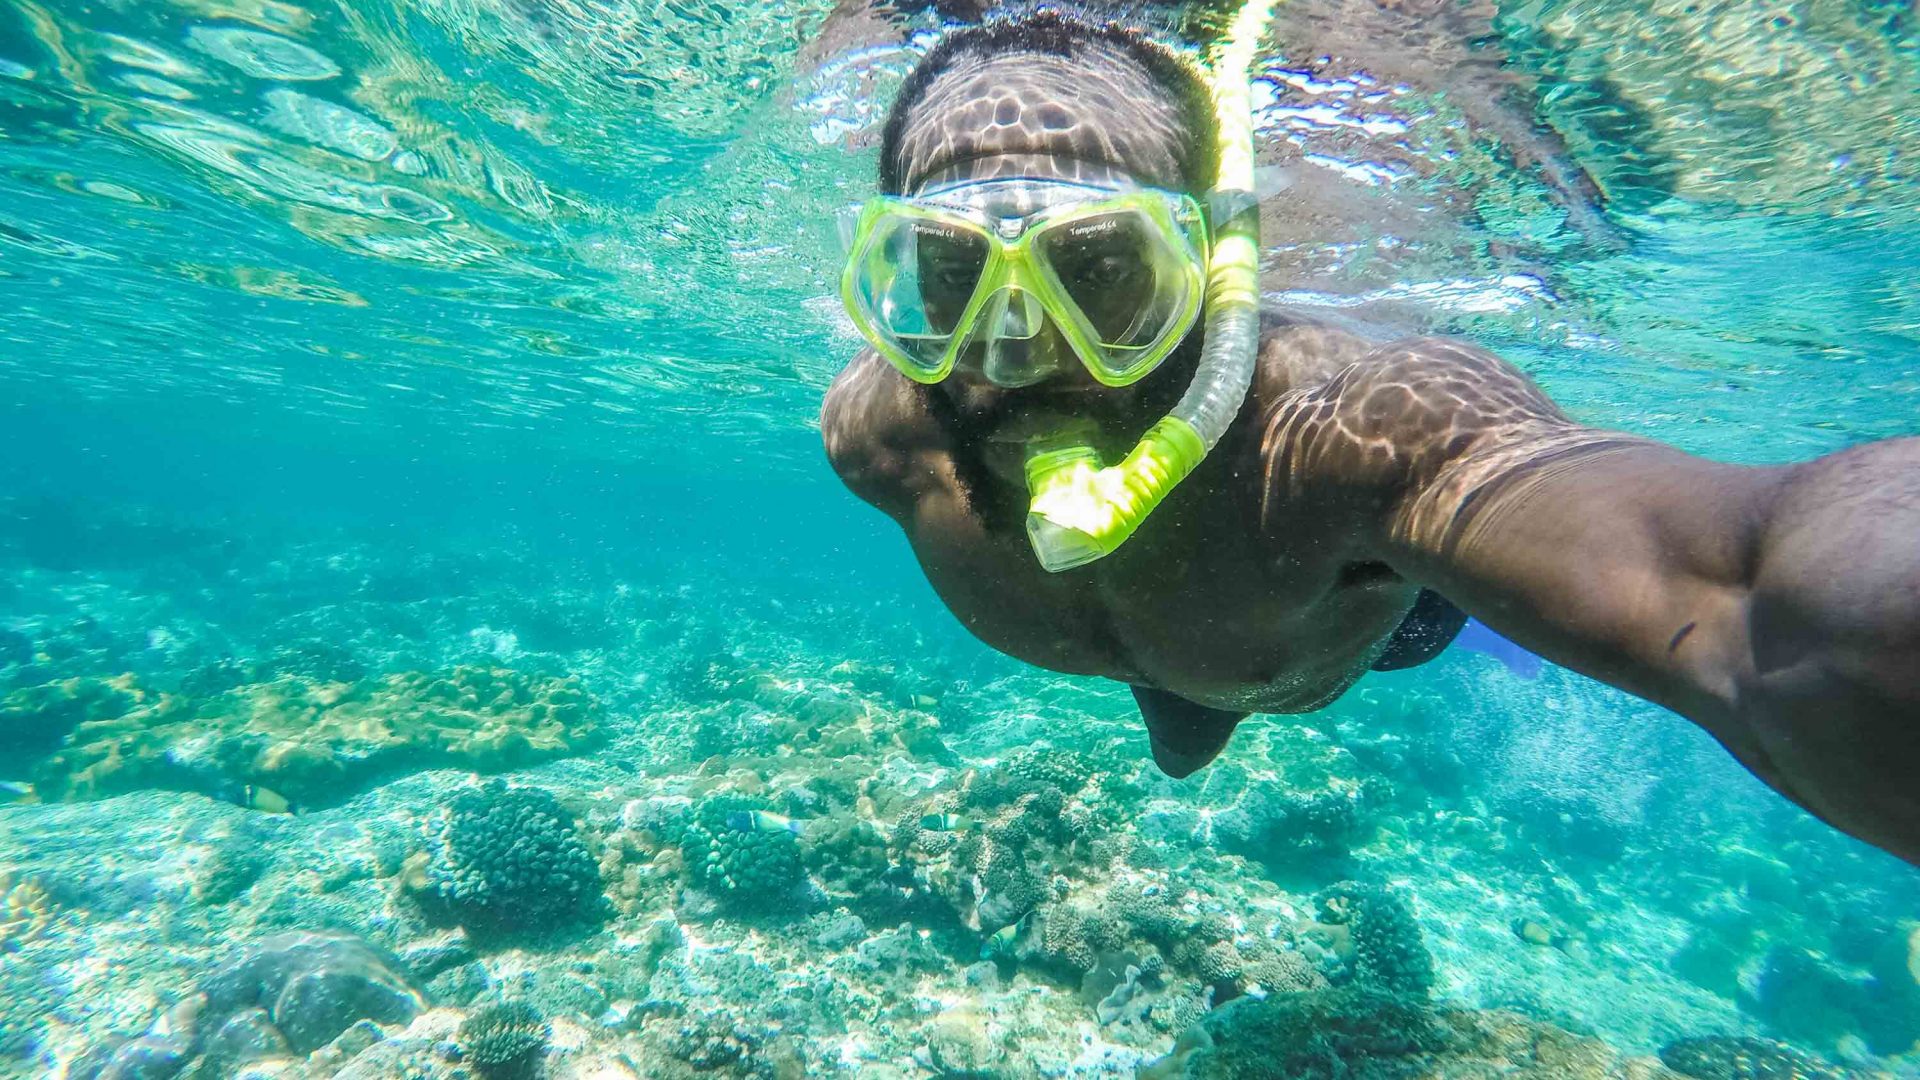 Mario Rigby swimming in the reefs near Bazaruto Island in Mozambique.